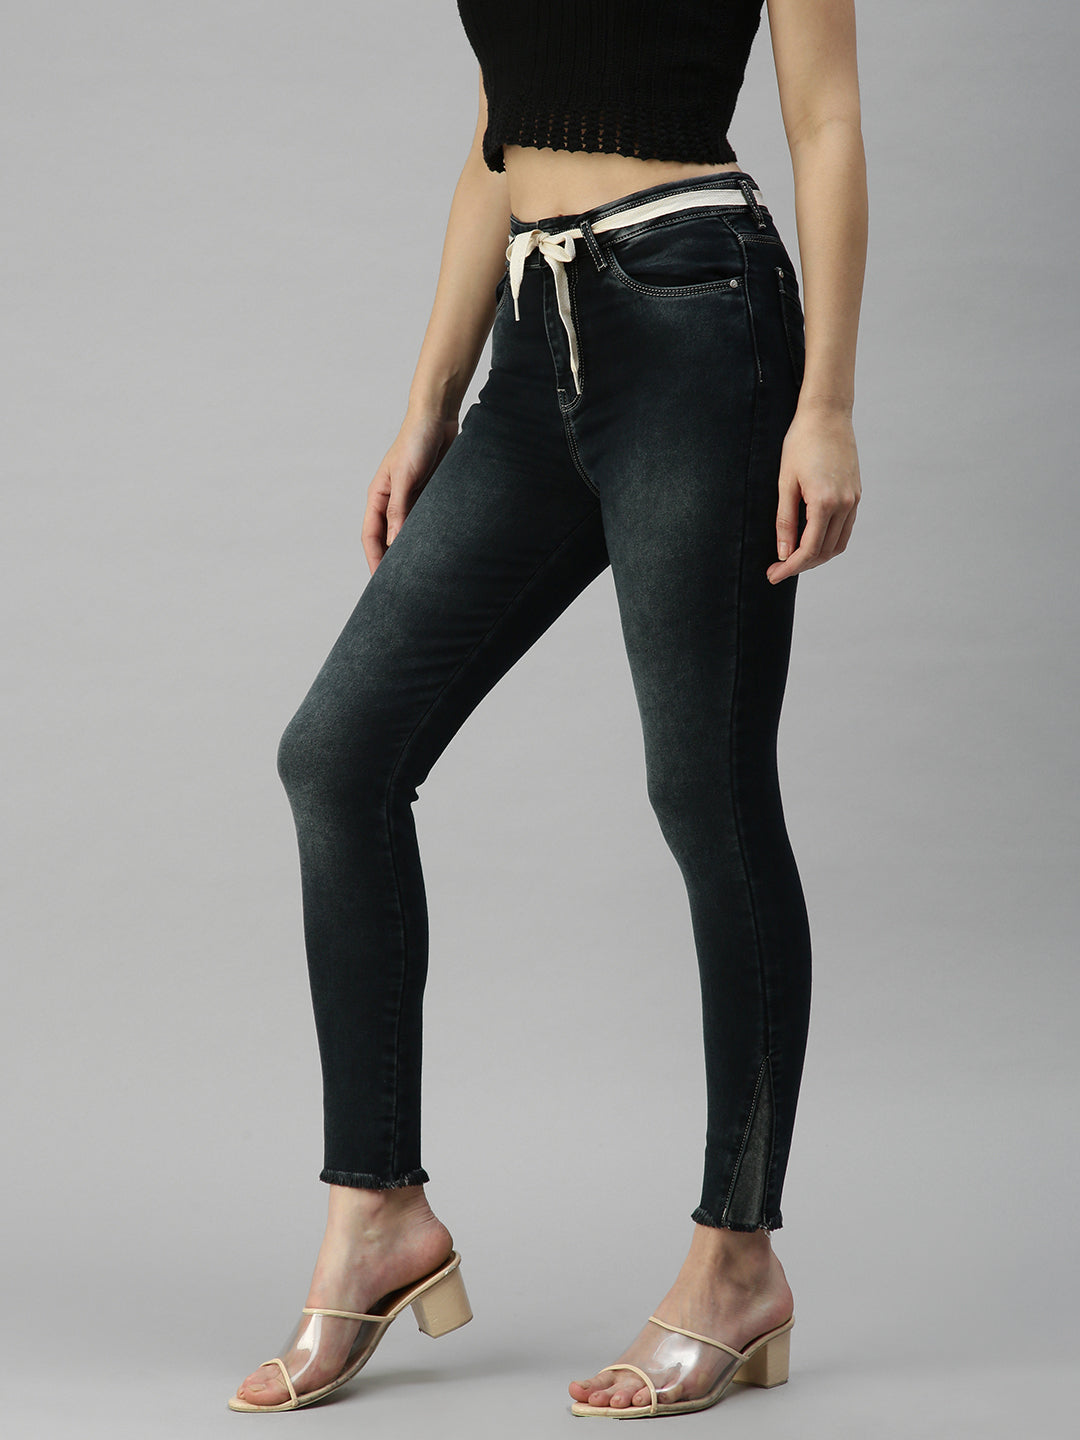 Women's Grey Solid Denim Skinny Jeans